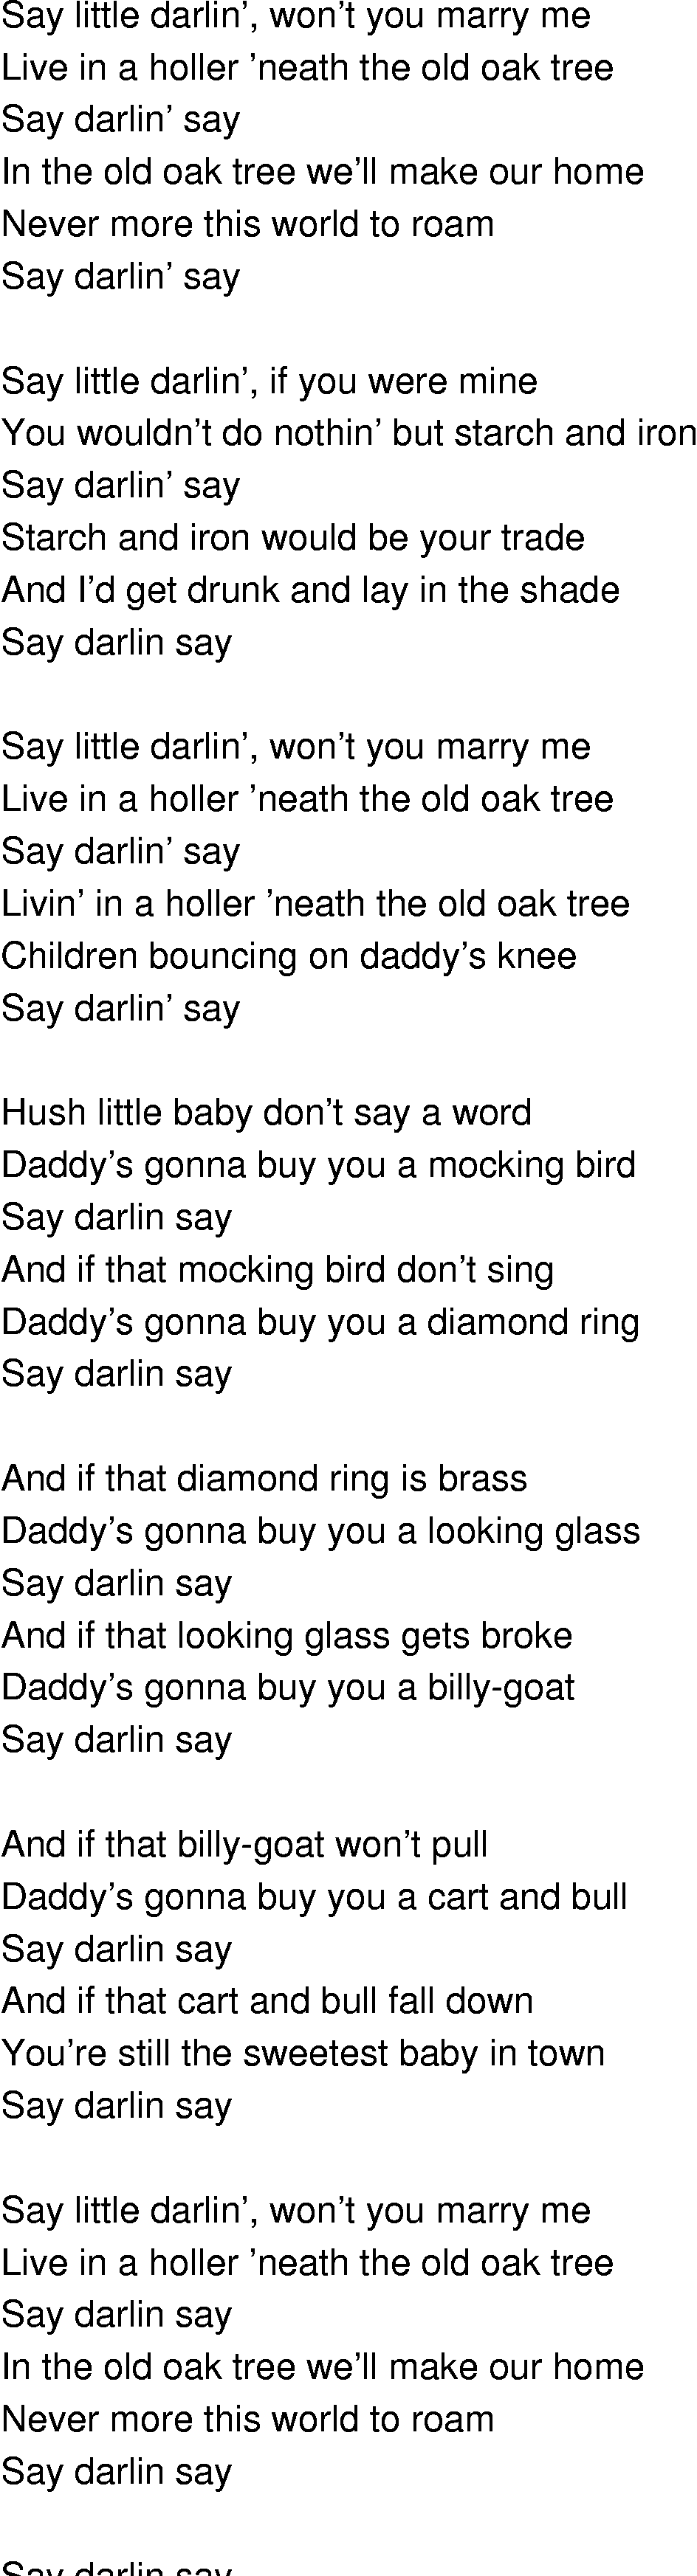 Old-Time (oldtimey) Song Lyrics - say darlin say